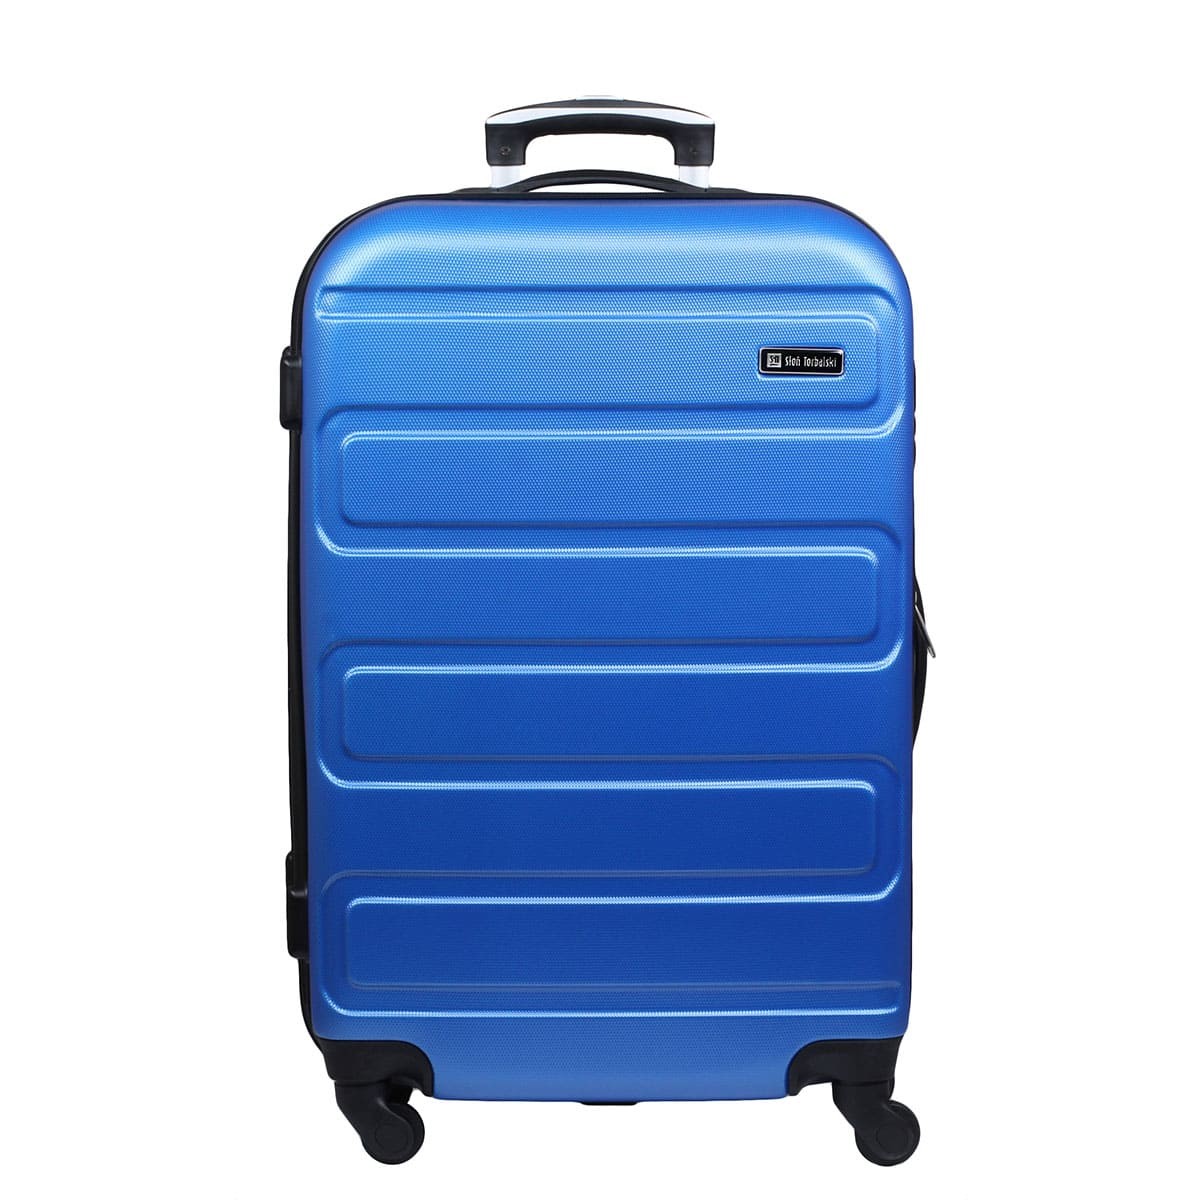 niebieska-walizka-podrozna-srednia-na-kolkach-Alexa-04-0511O-28.jpg